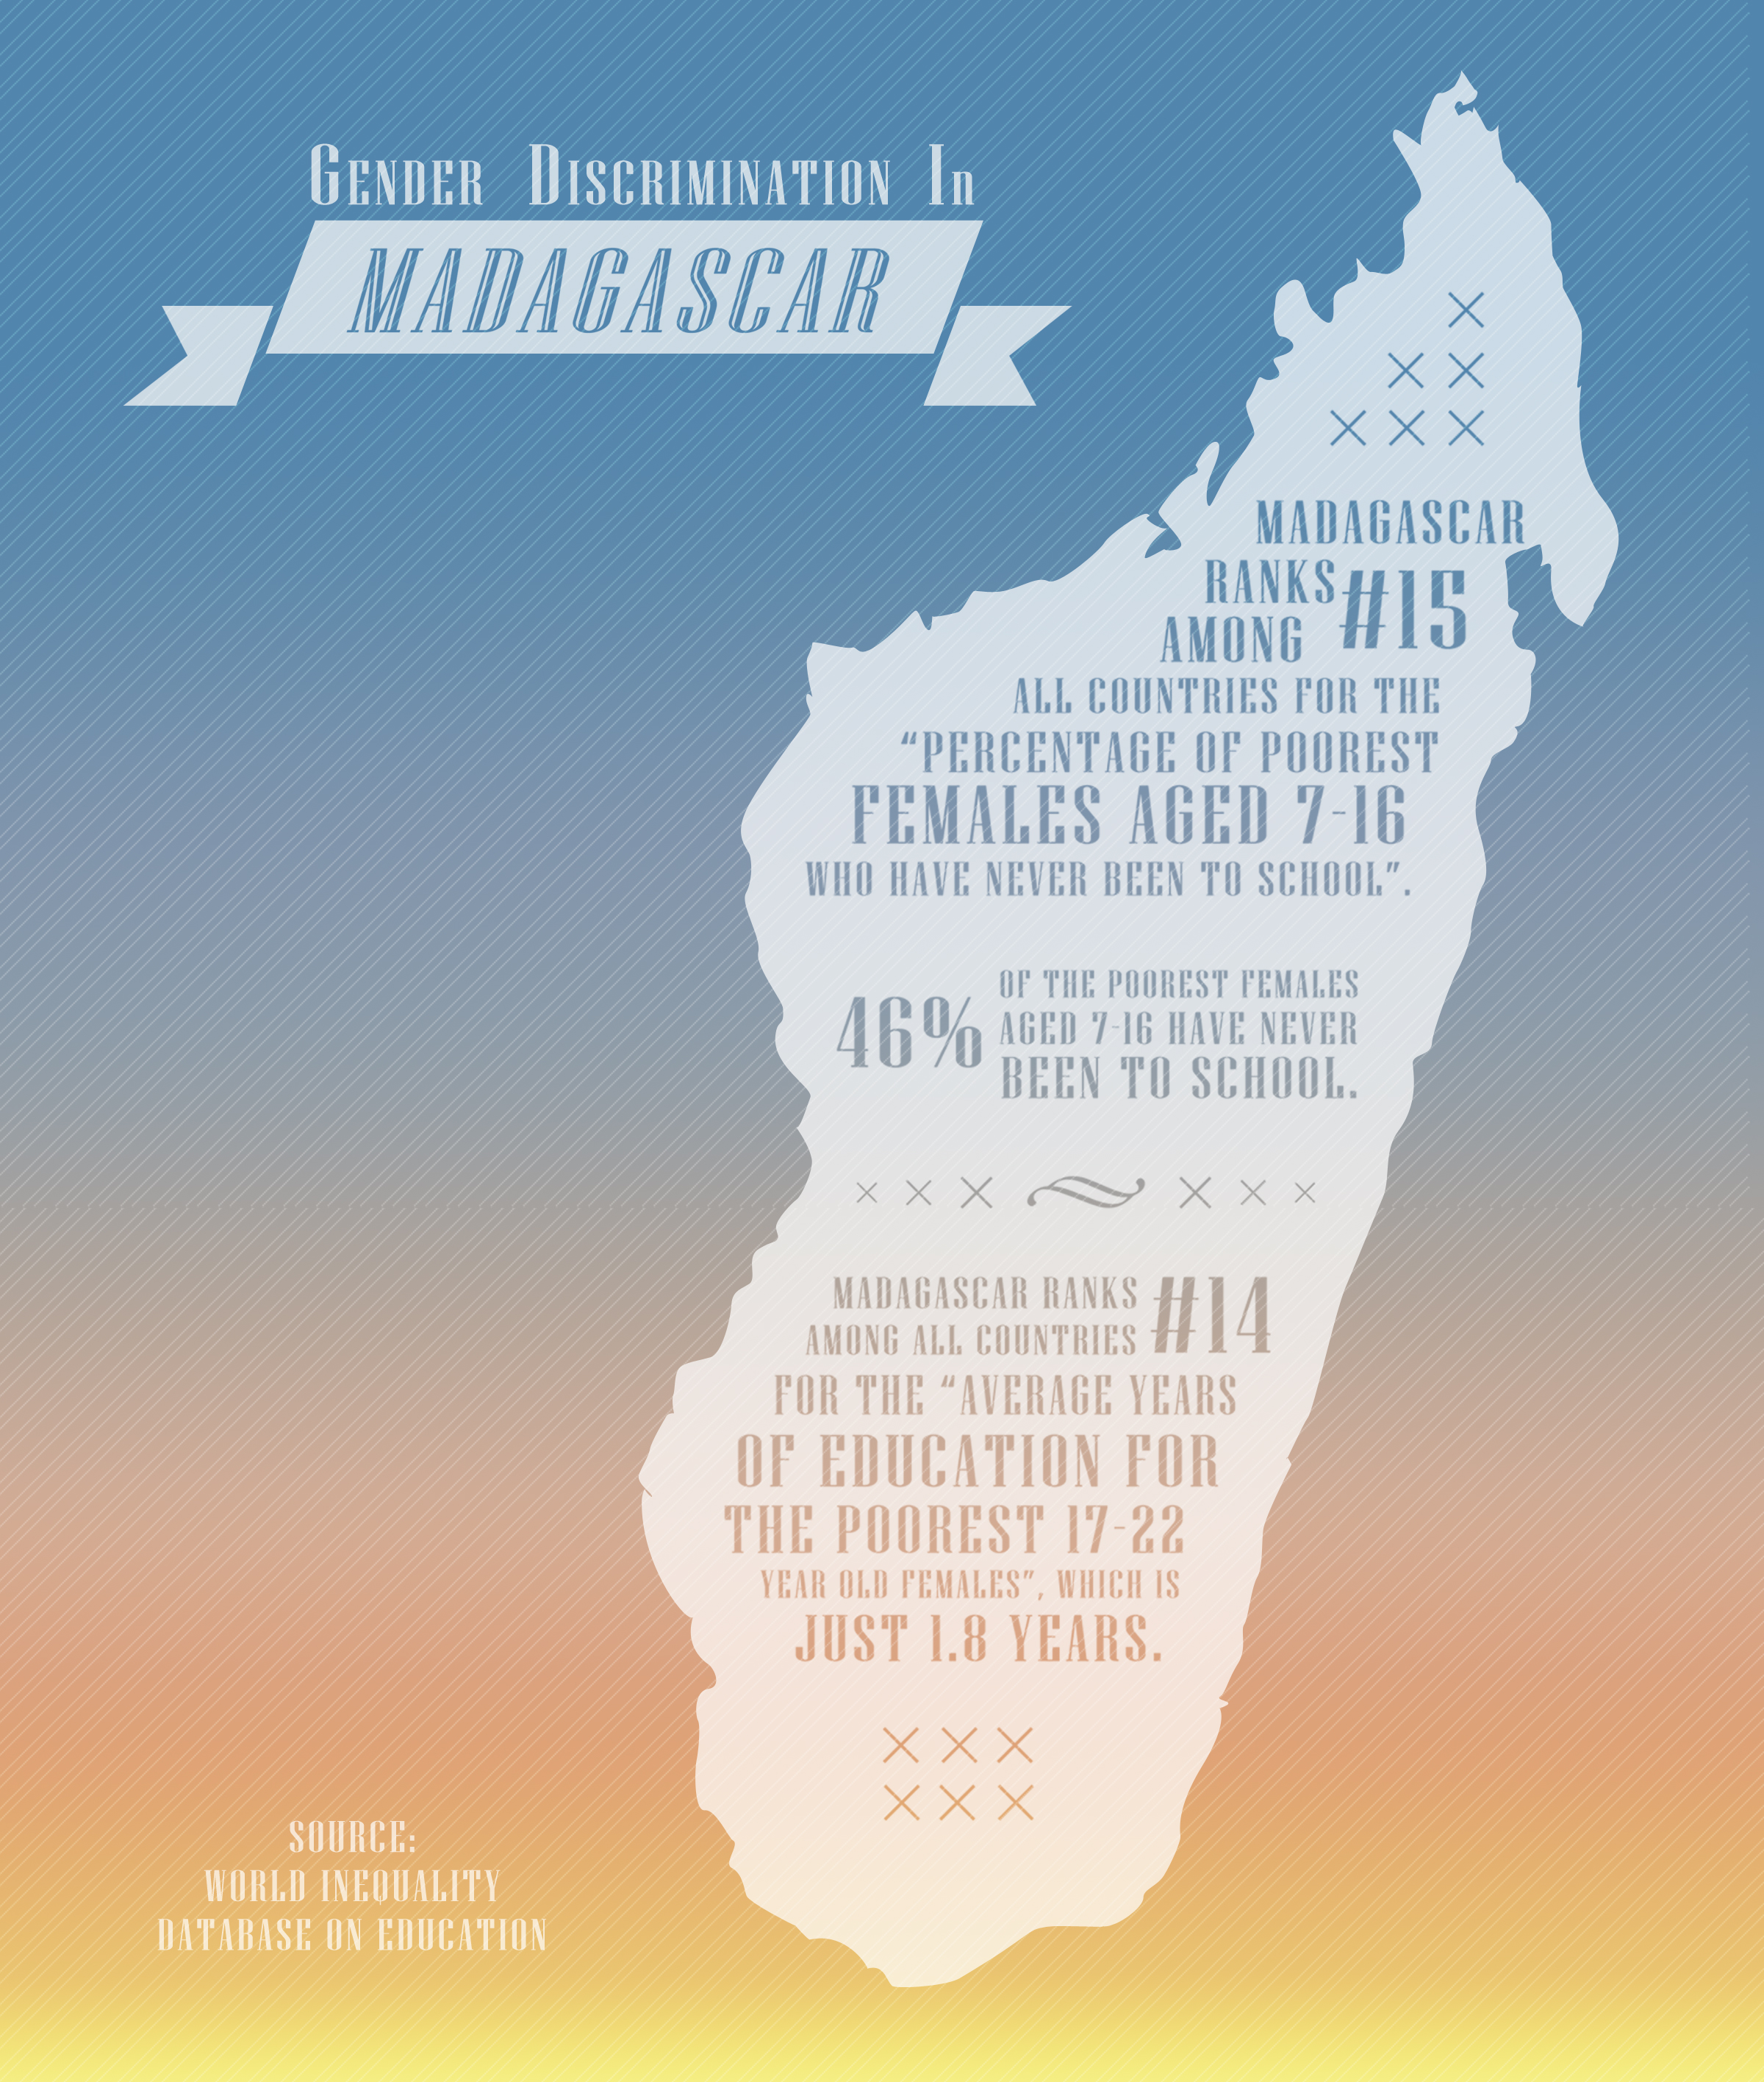 Gender Discrimination in Madagascar infographic